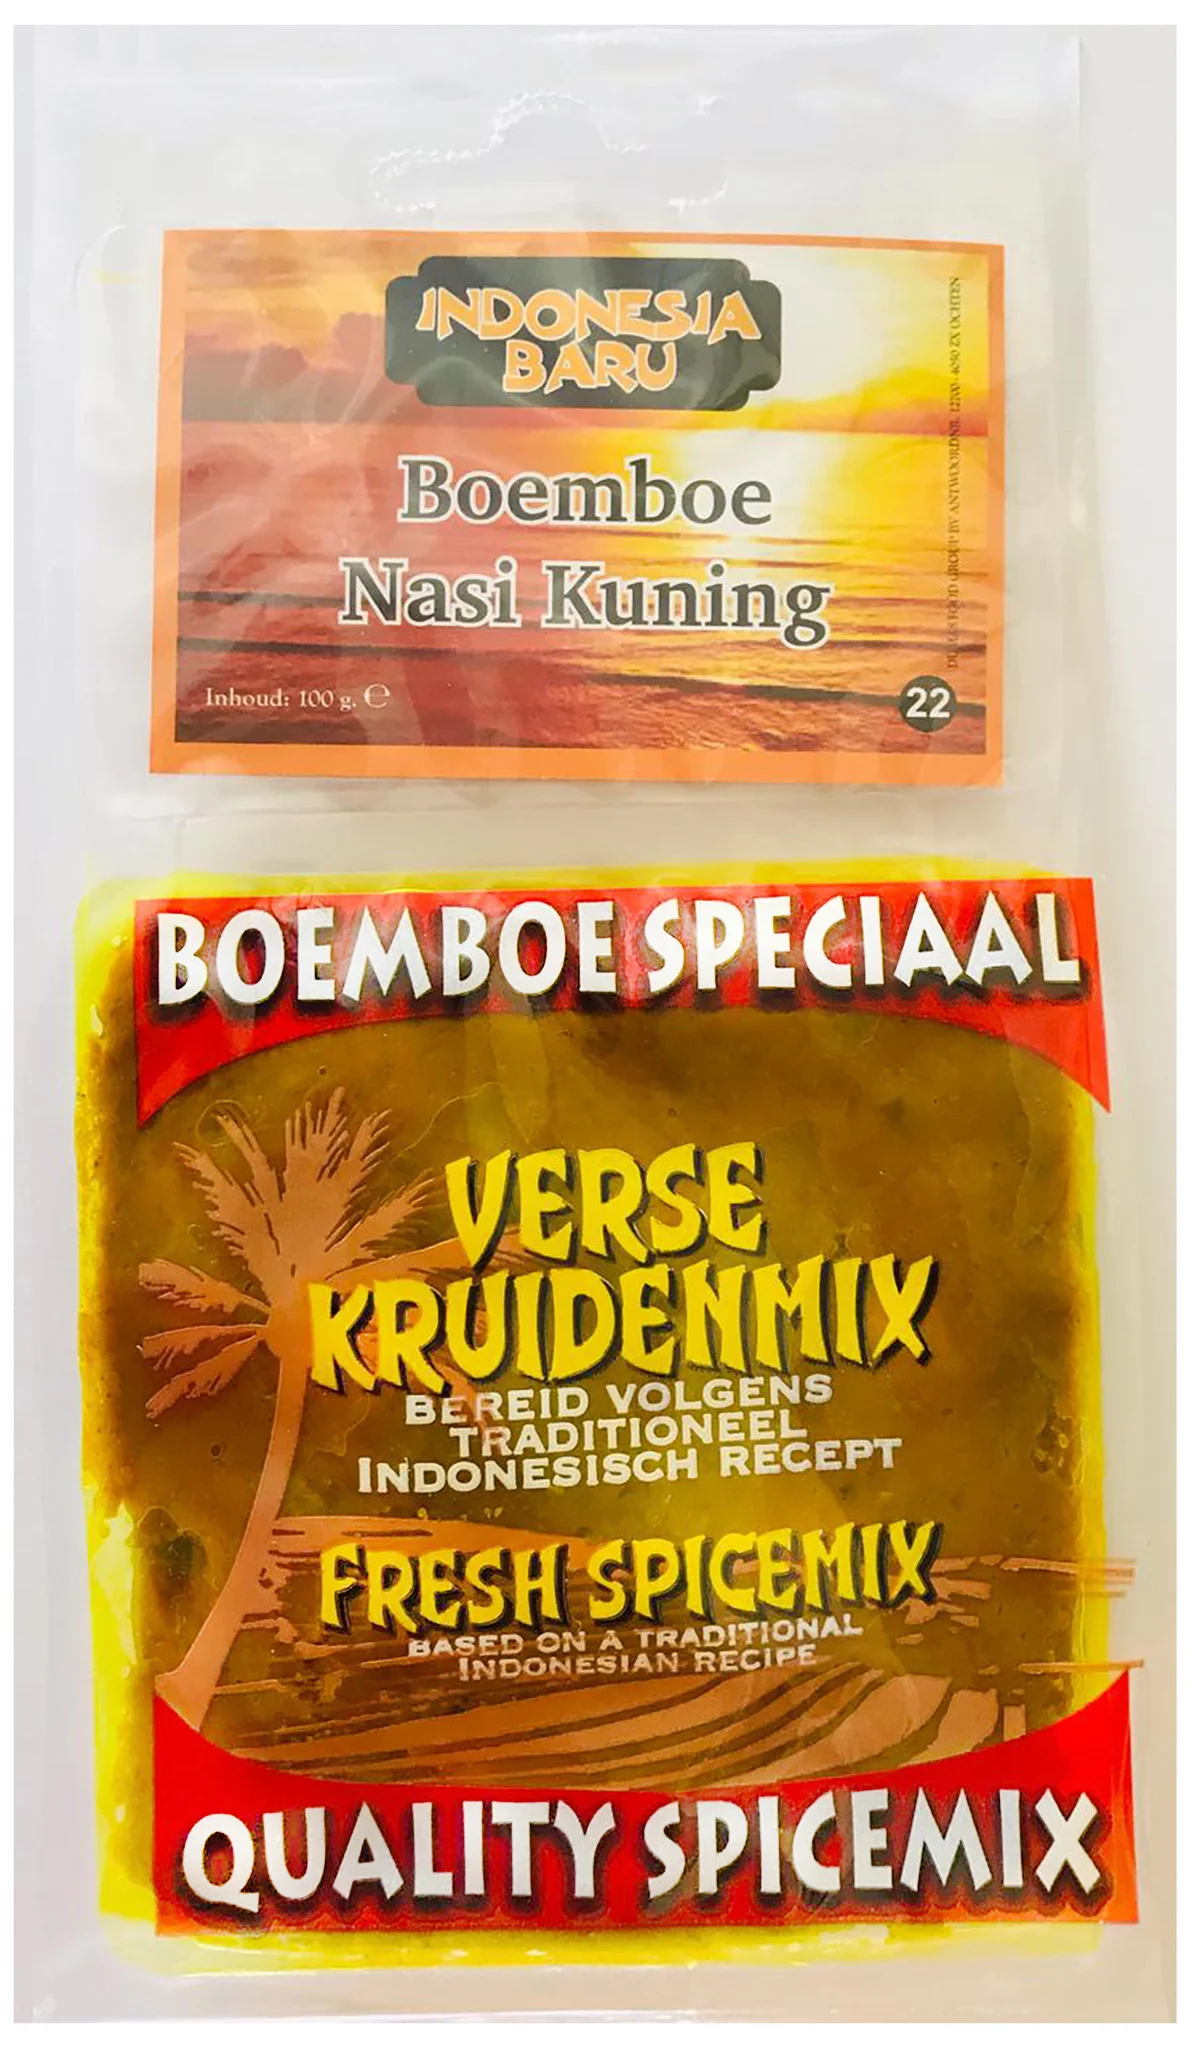 Boemboe Nasi Kuning